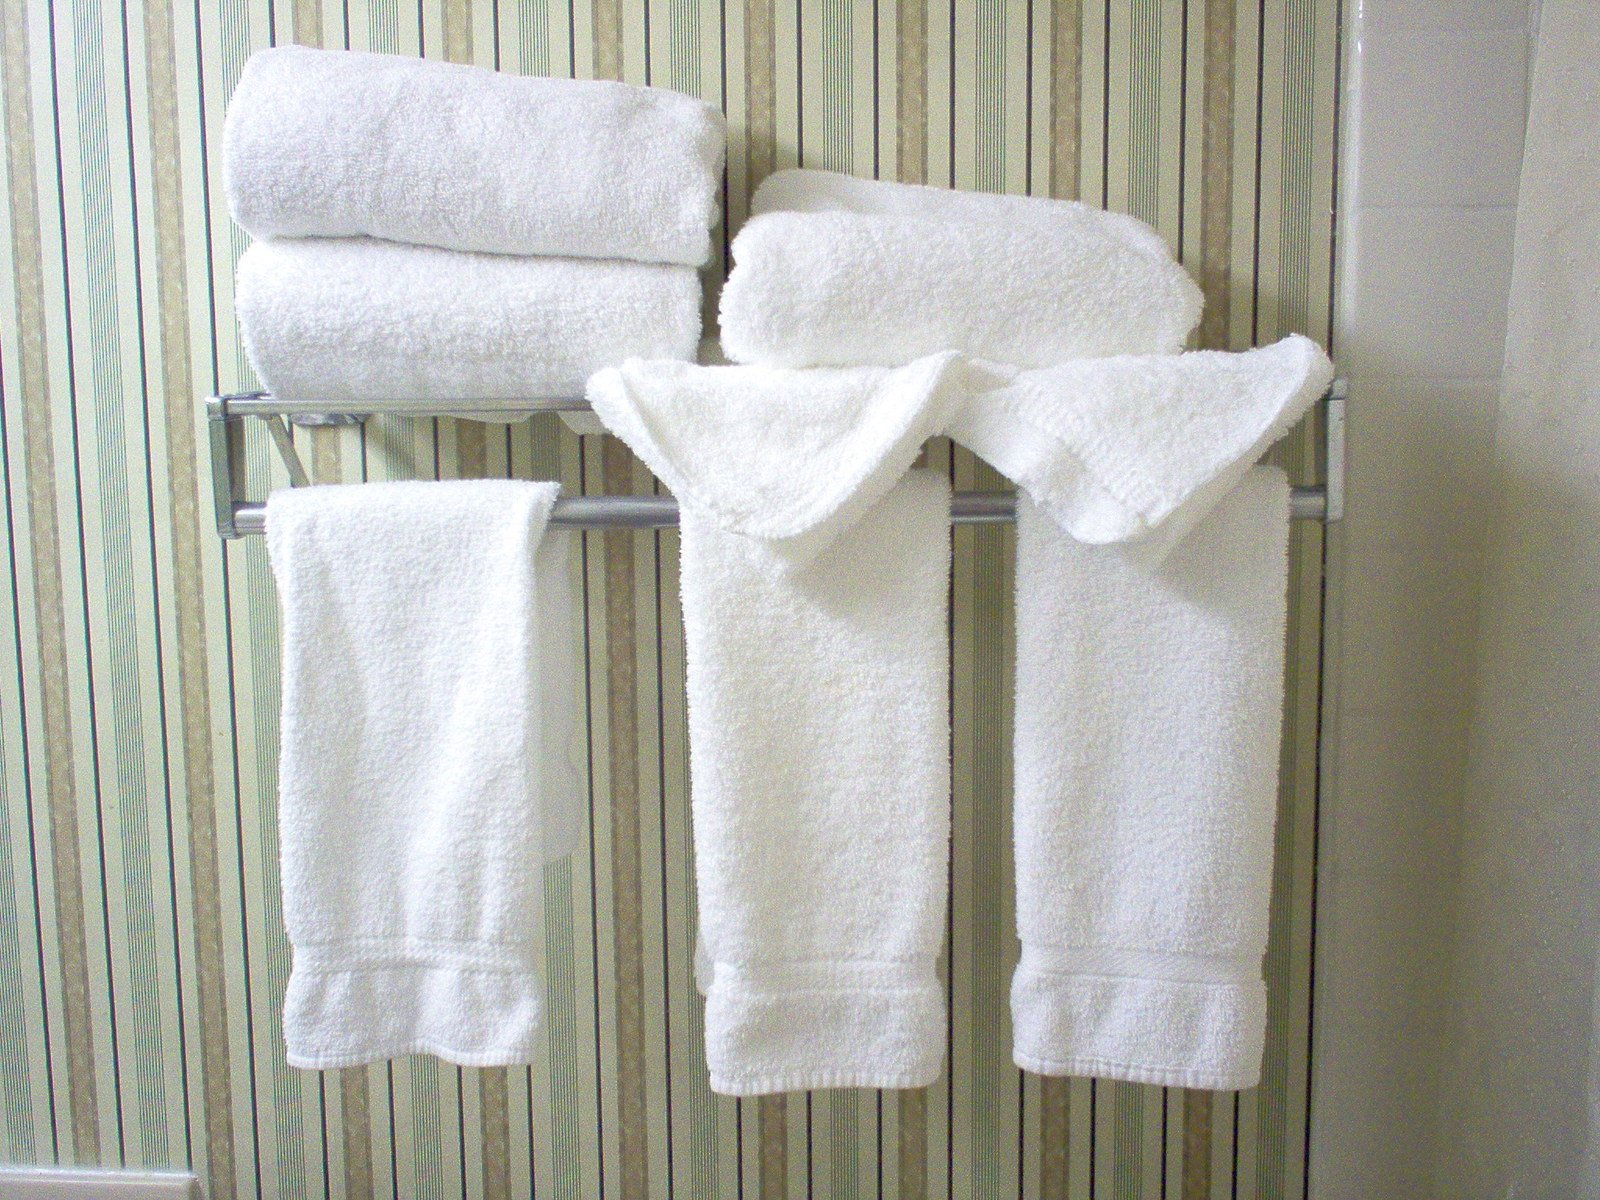 a towel rack holding six white towels